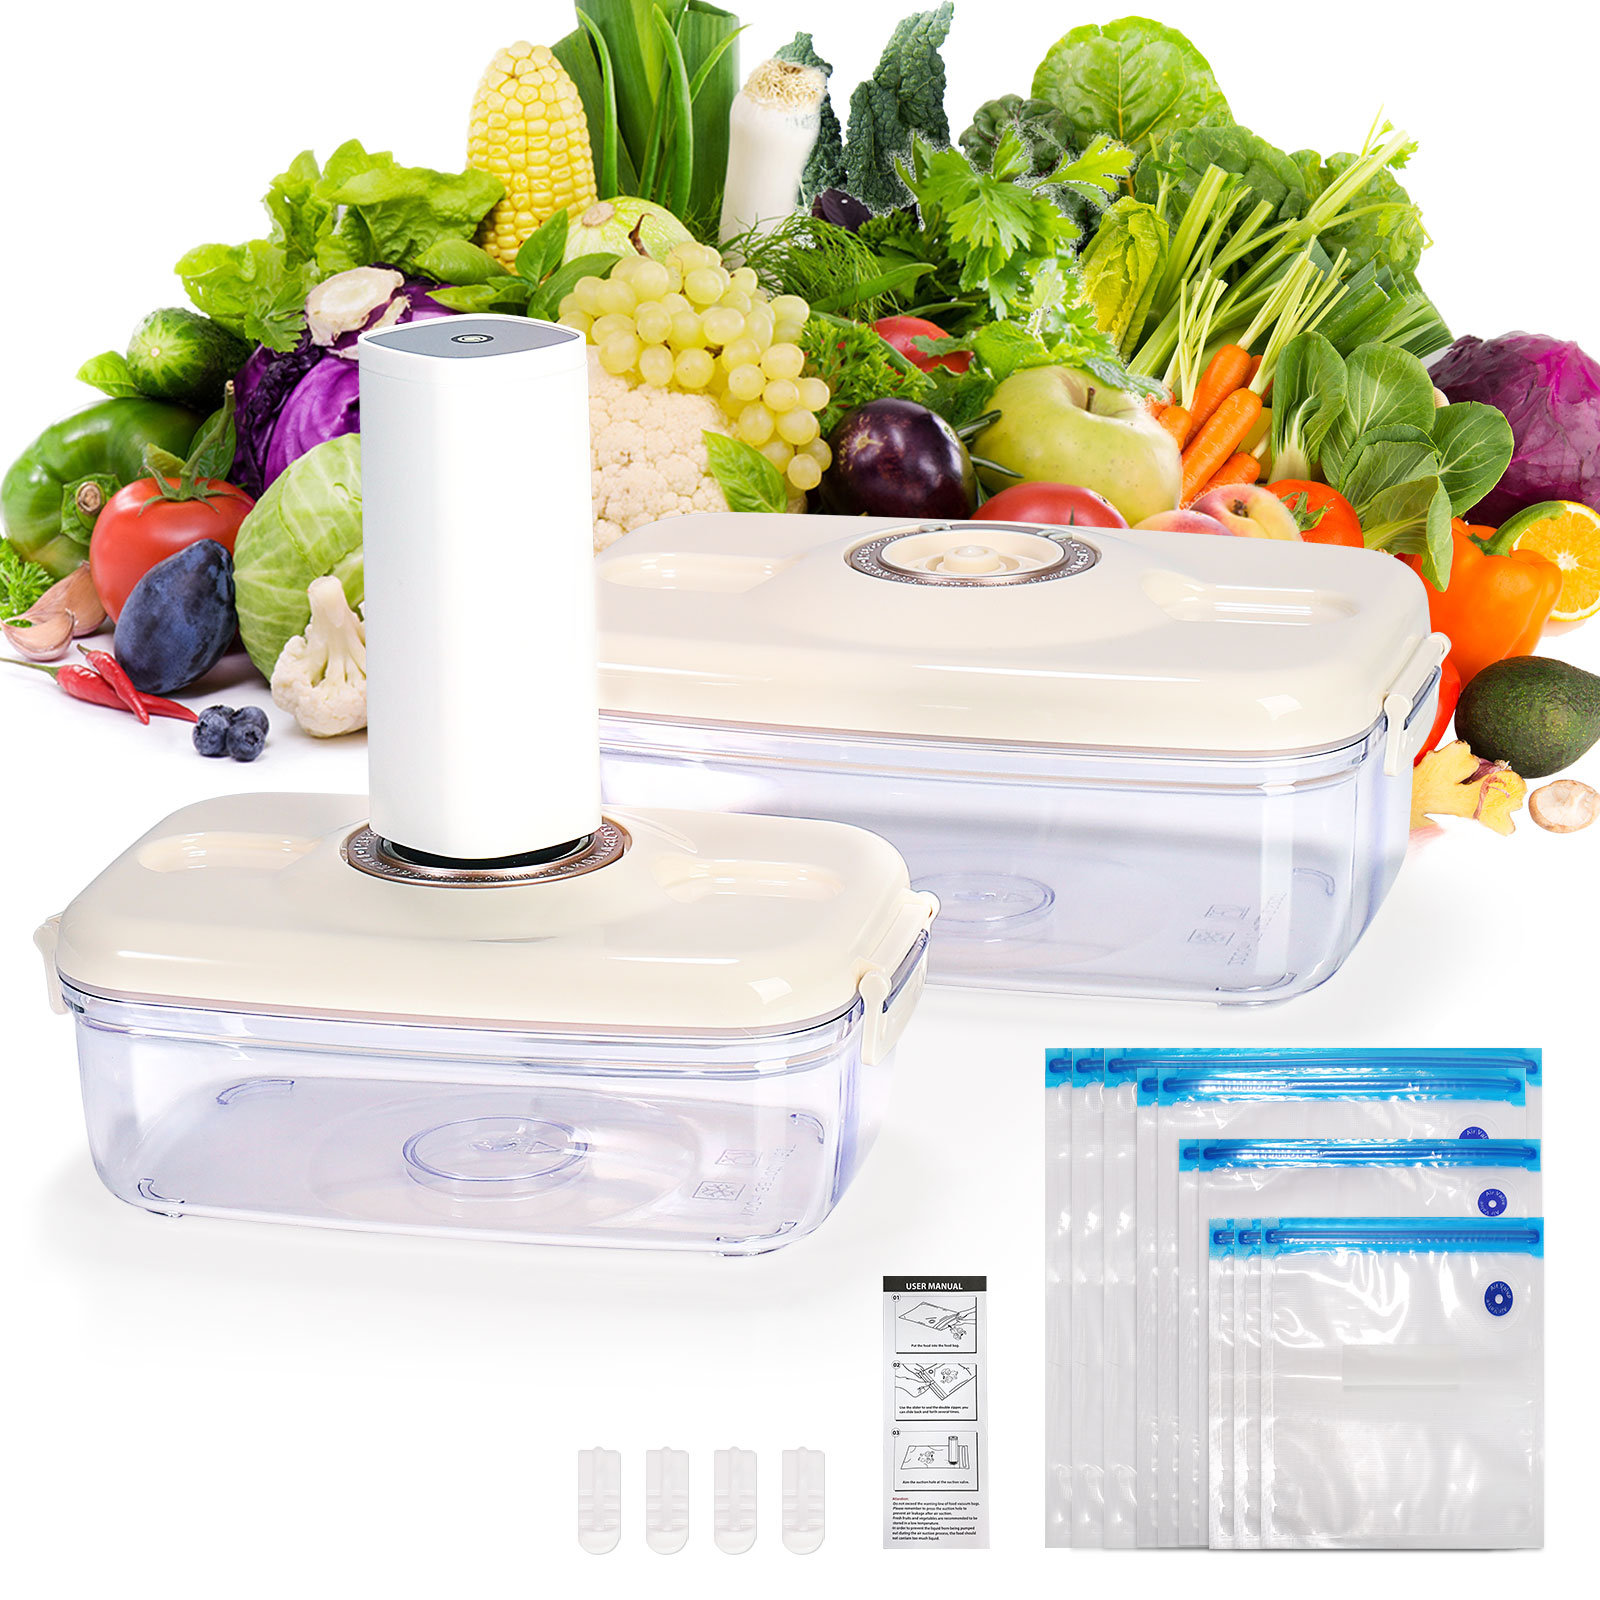 Lasting Freshness Vacuum Seal 5 Container Food Storage Set